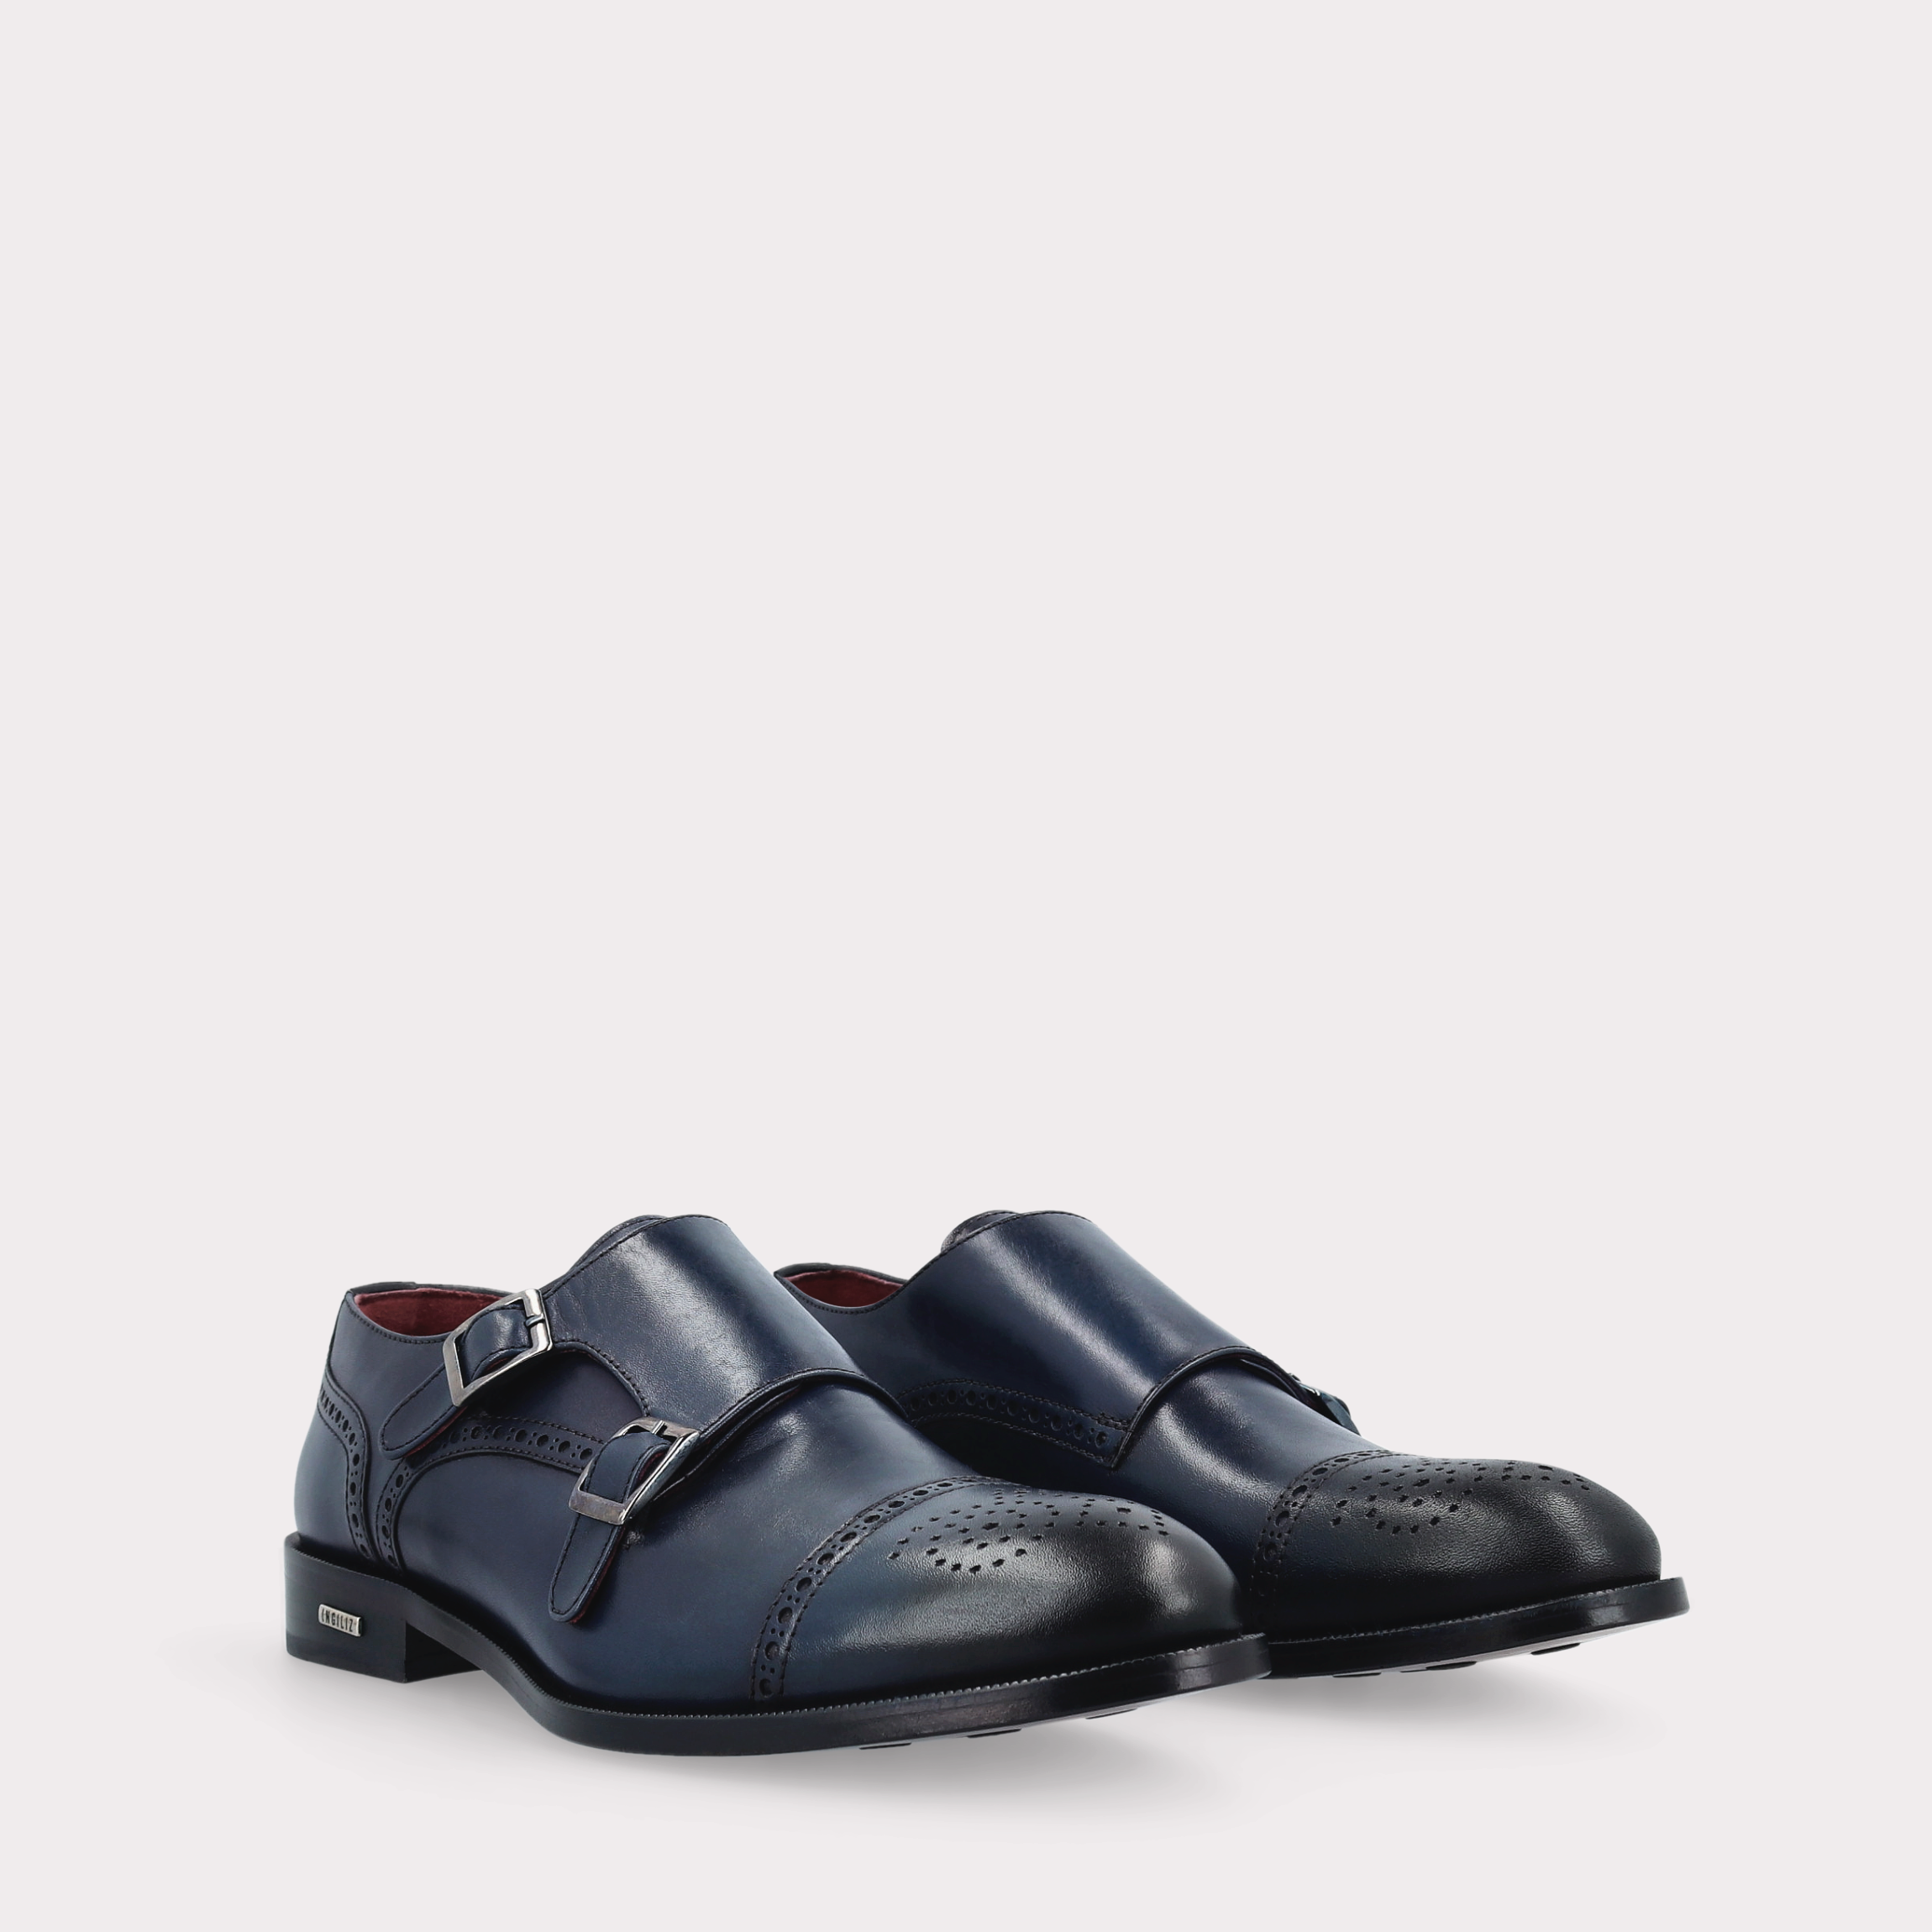 TRENTO 01 dark blue leather monk strap shoes